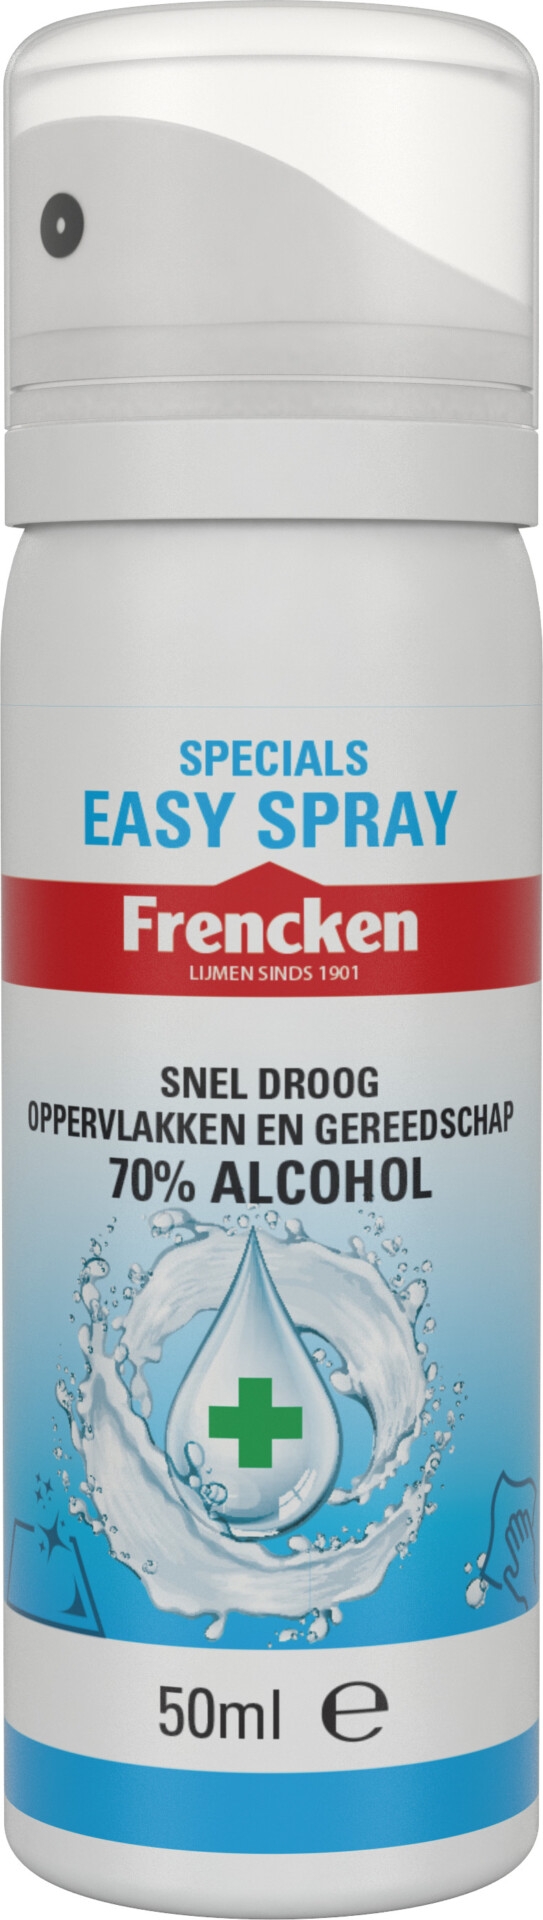 Frencken easy spray spuitbus